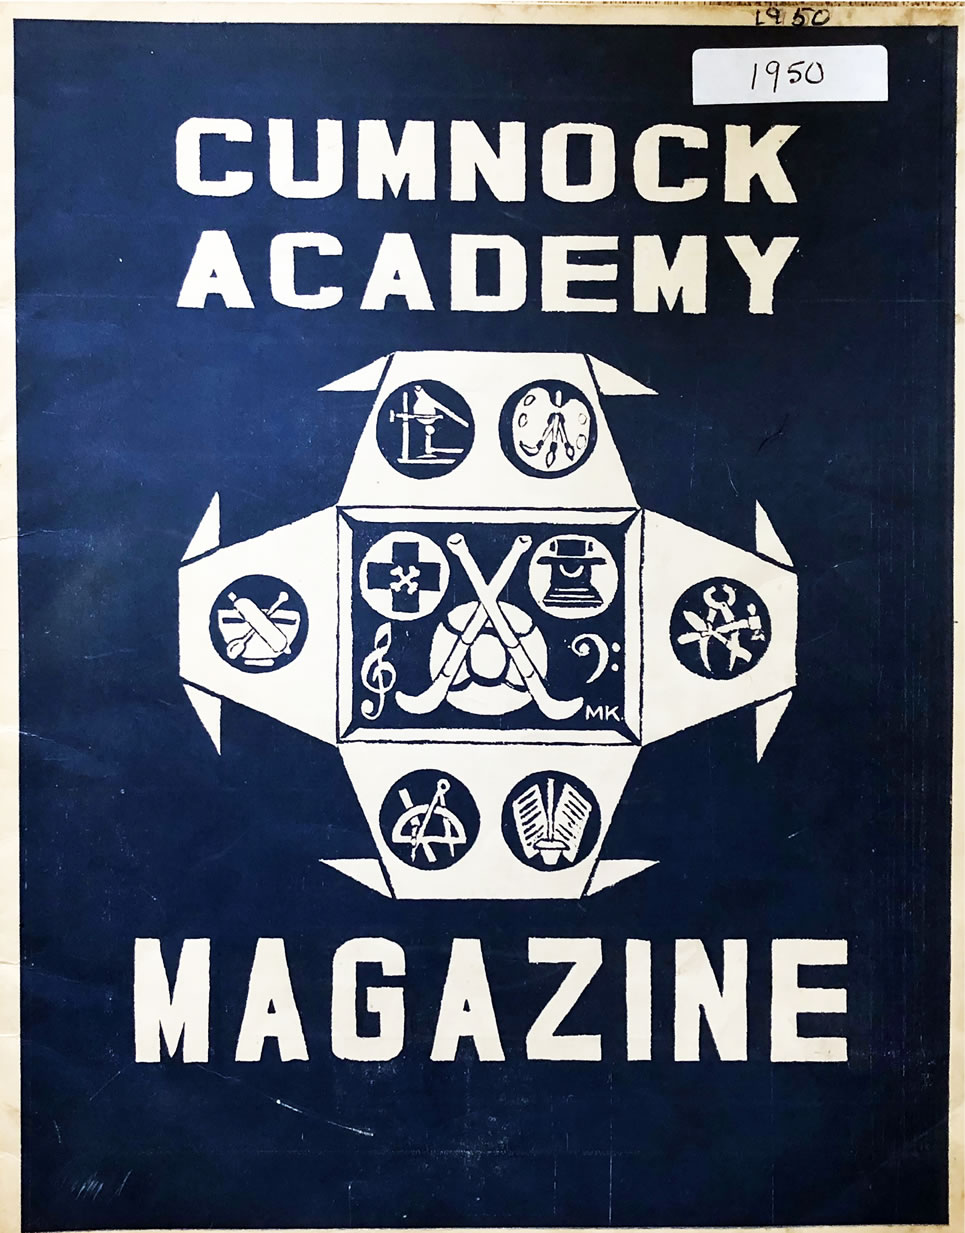 001Cumnock_Academy_Magazine_1950